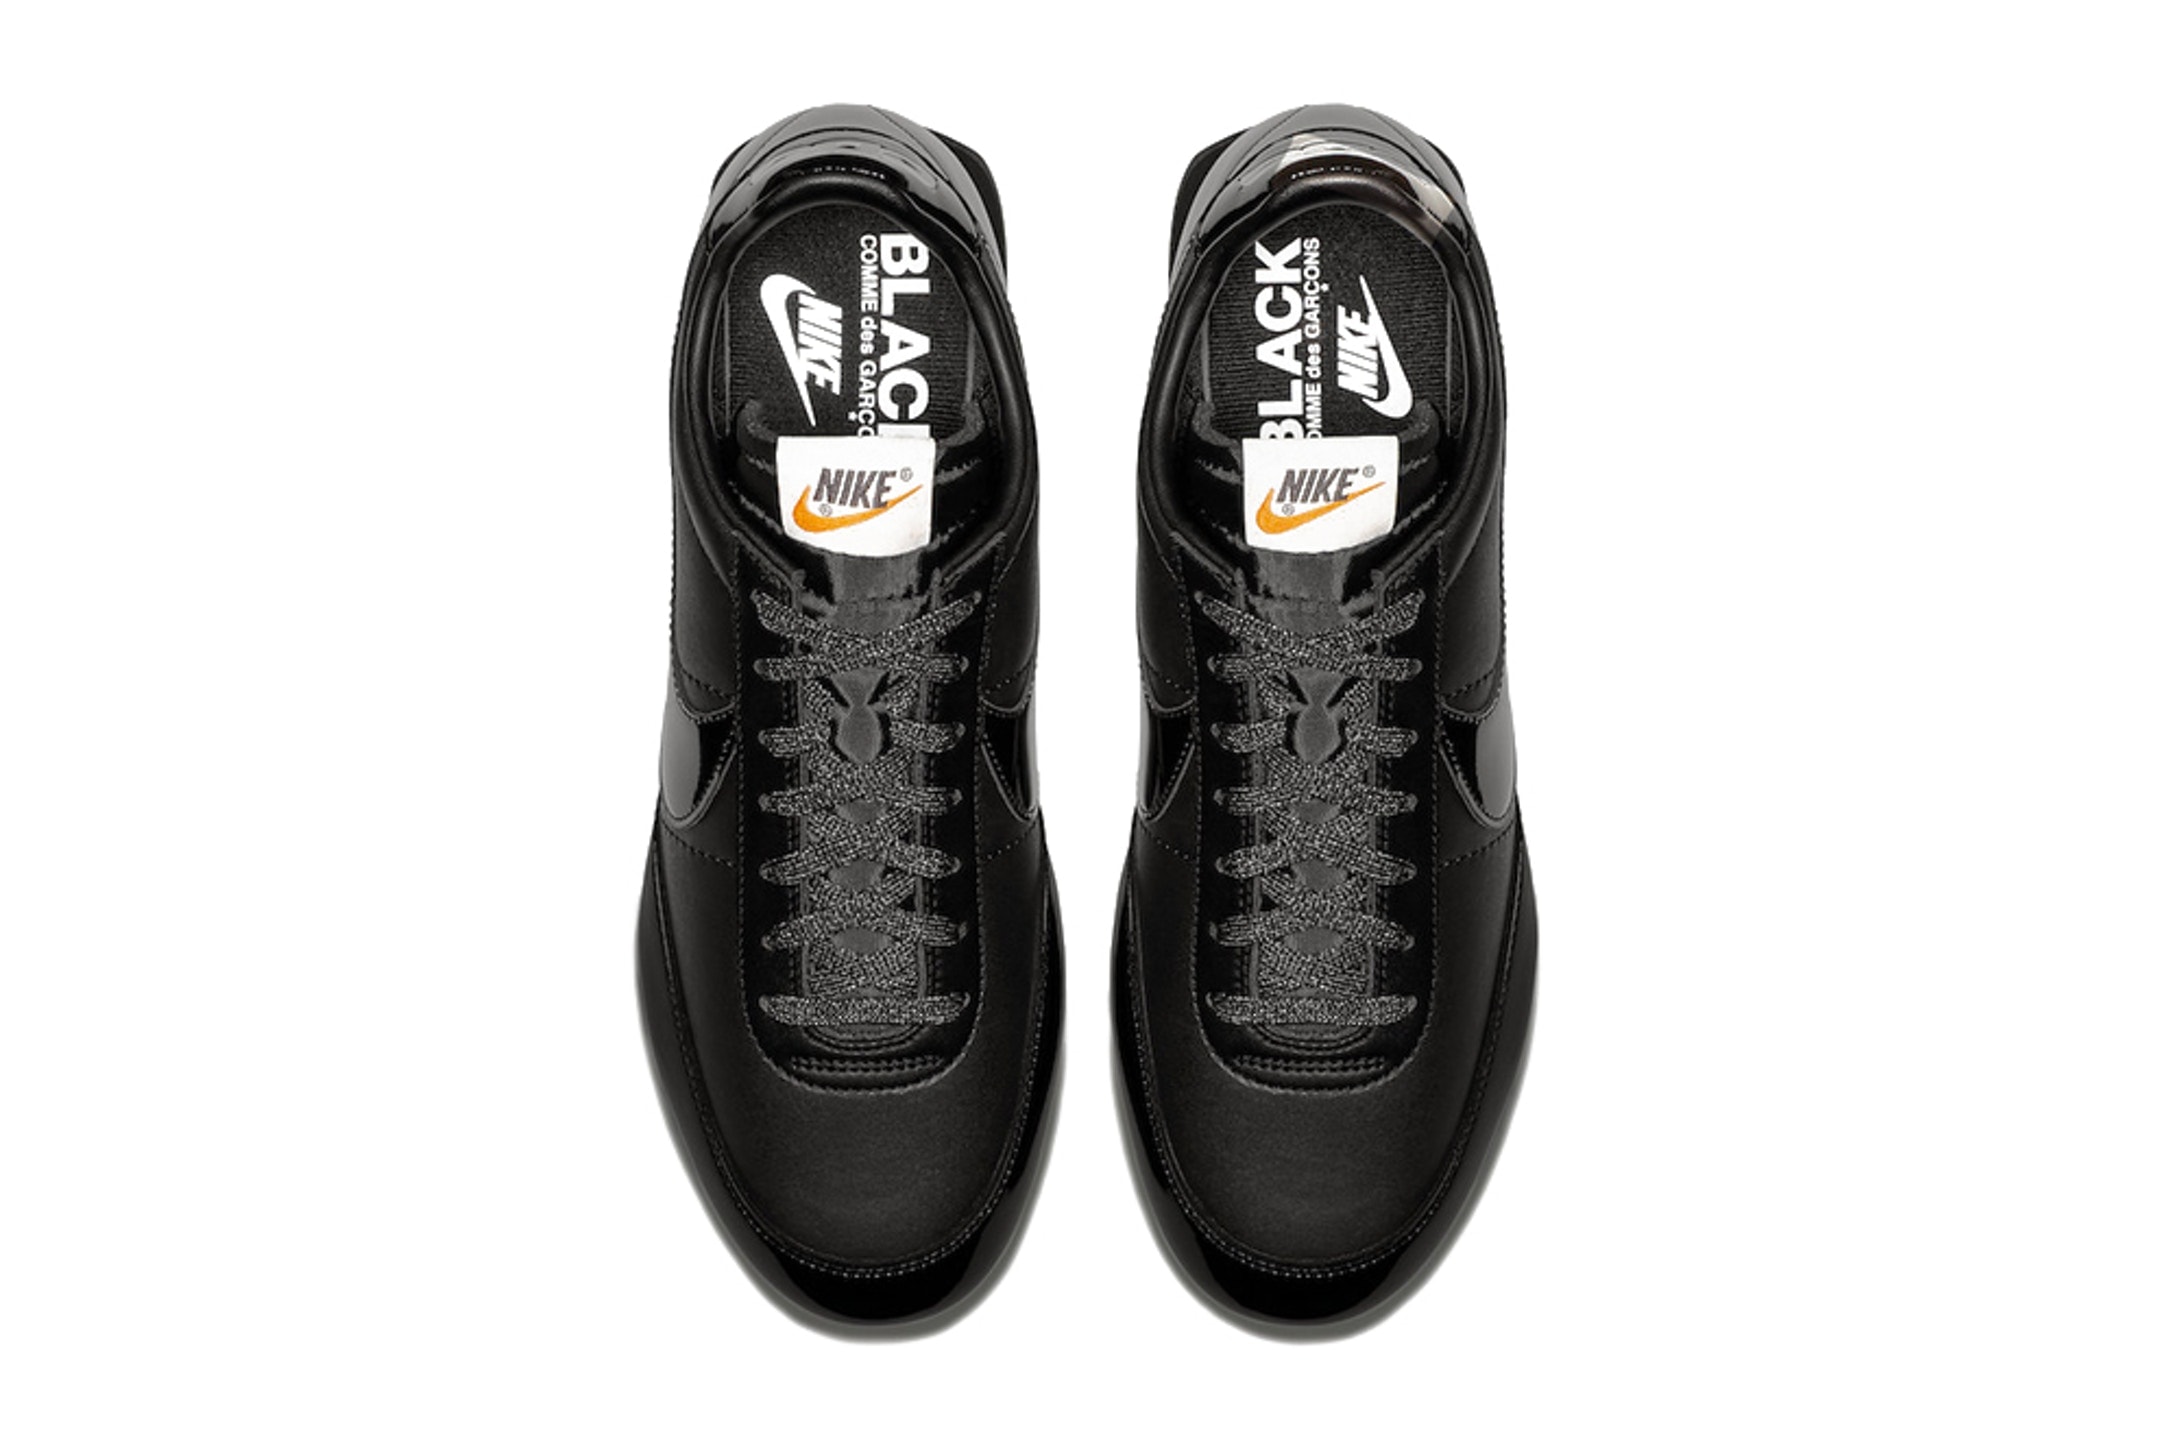 COMME des GARÇONS Black x Nike Night Track 聯名鞋款官方圖片釋出